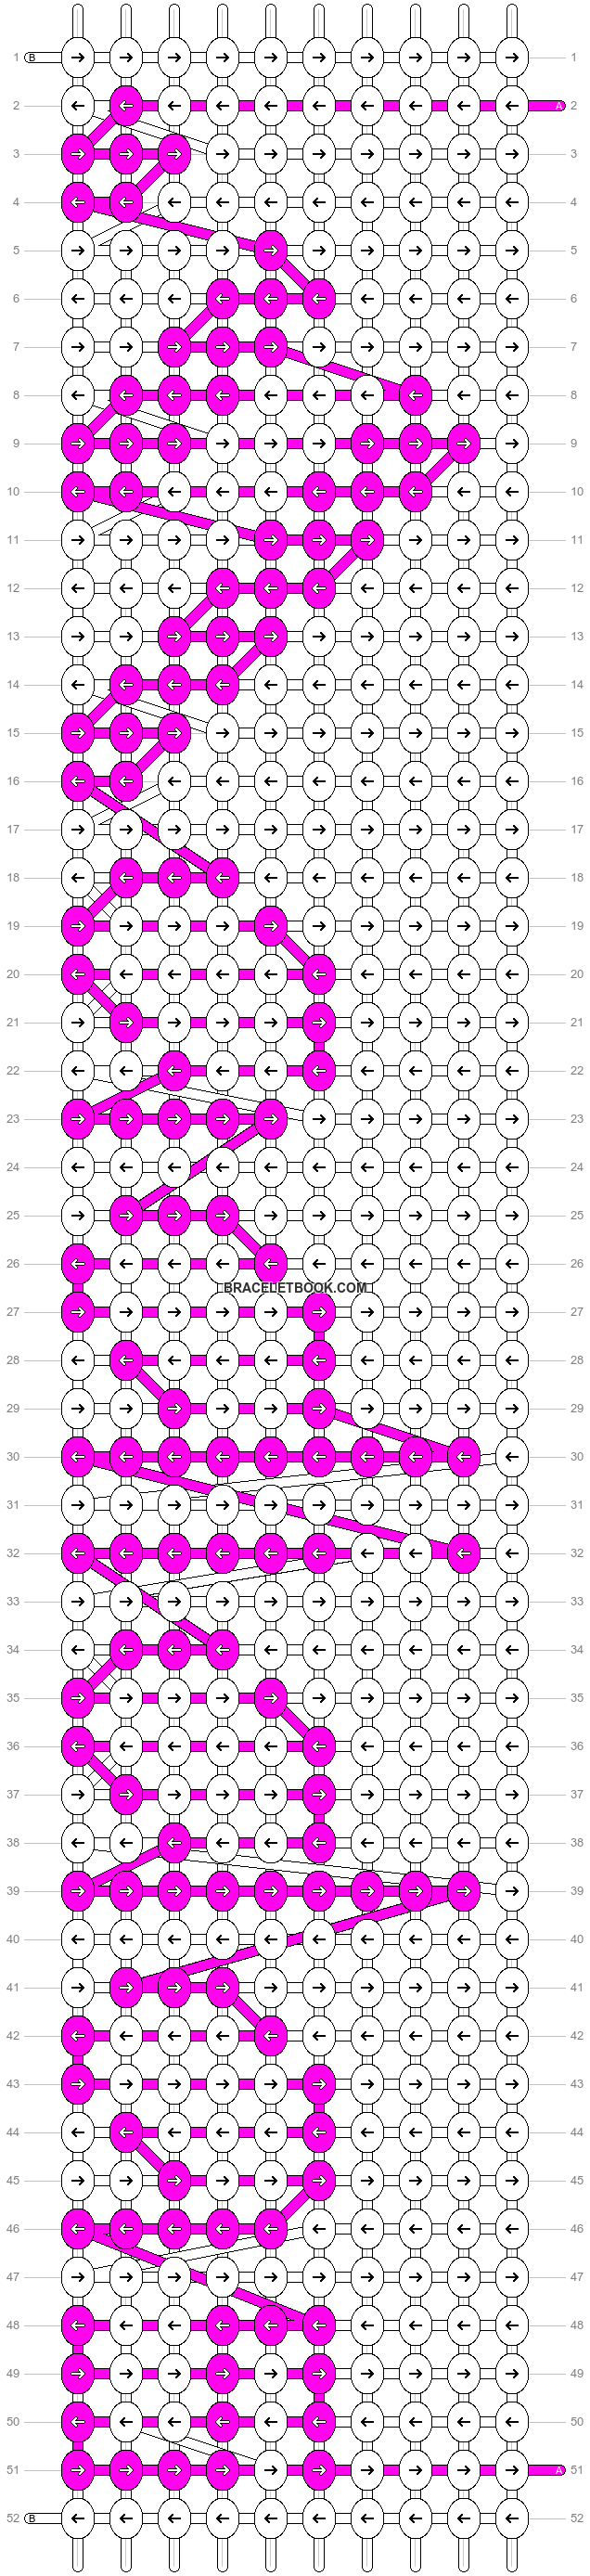 Alpha pattern #57019 variation #99557 pattern